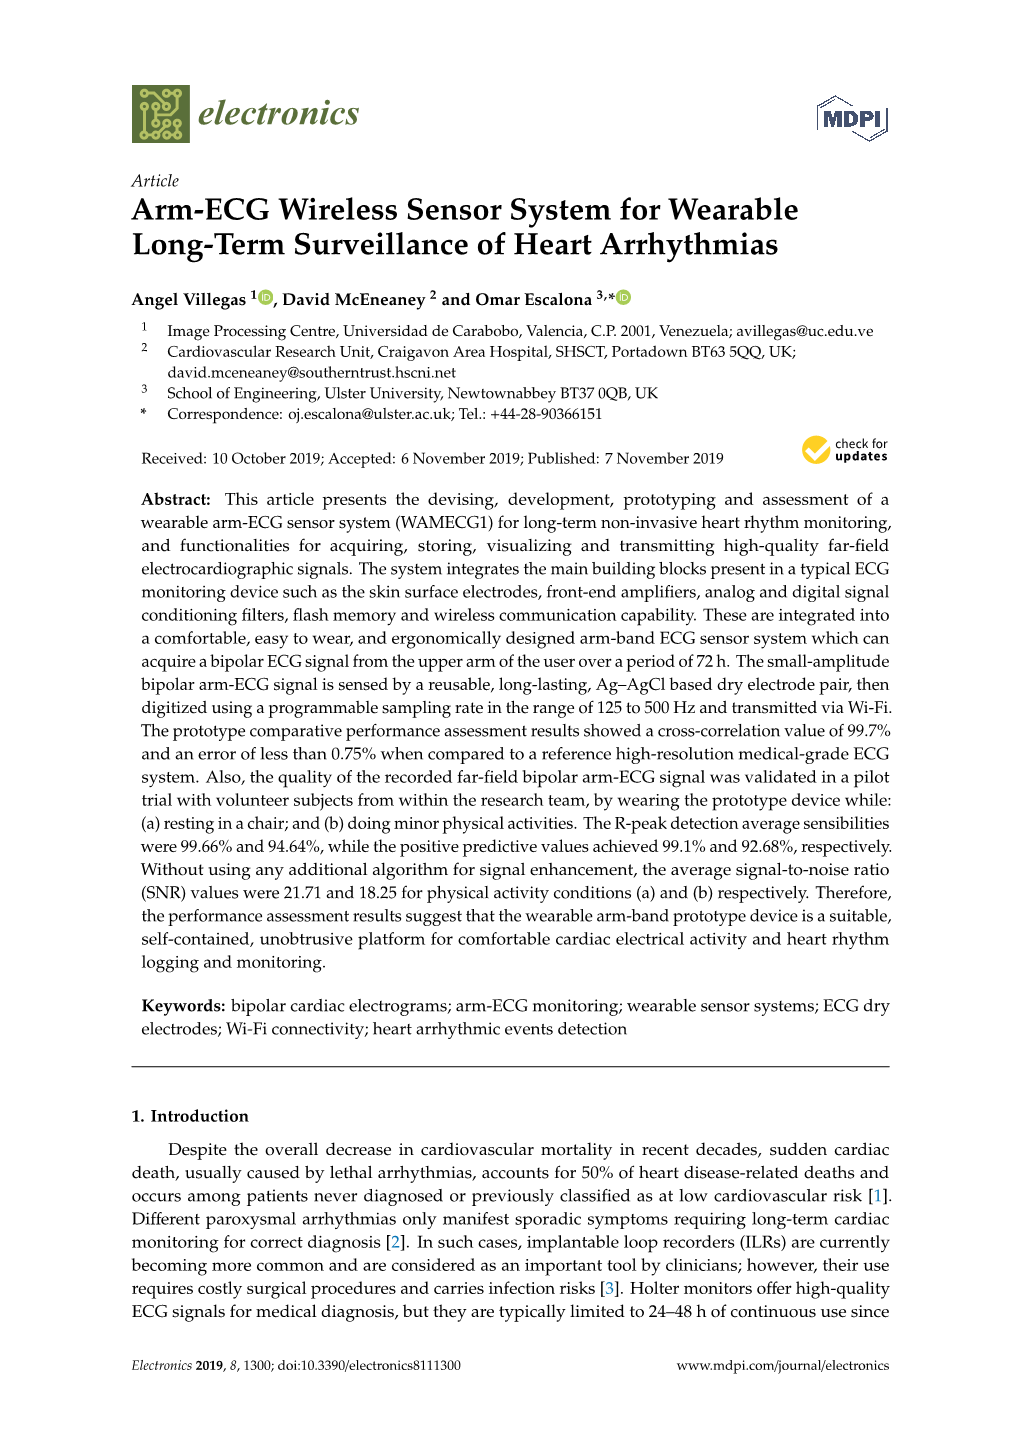 Arm-ECG Wireless Sensor System for Wearable Long-Term Surveillance of Heart Arrhythmias